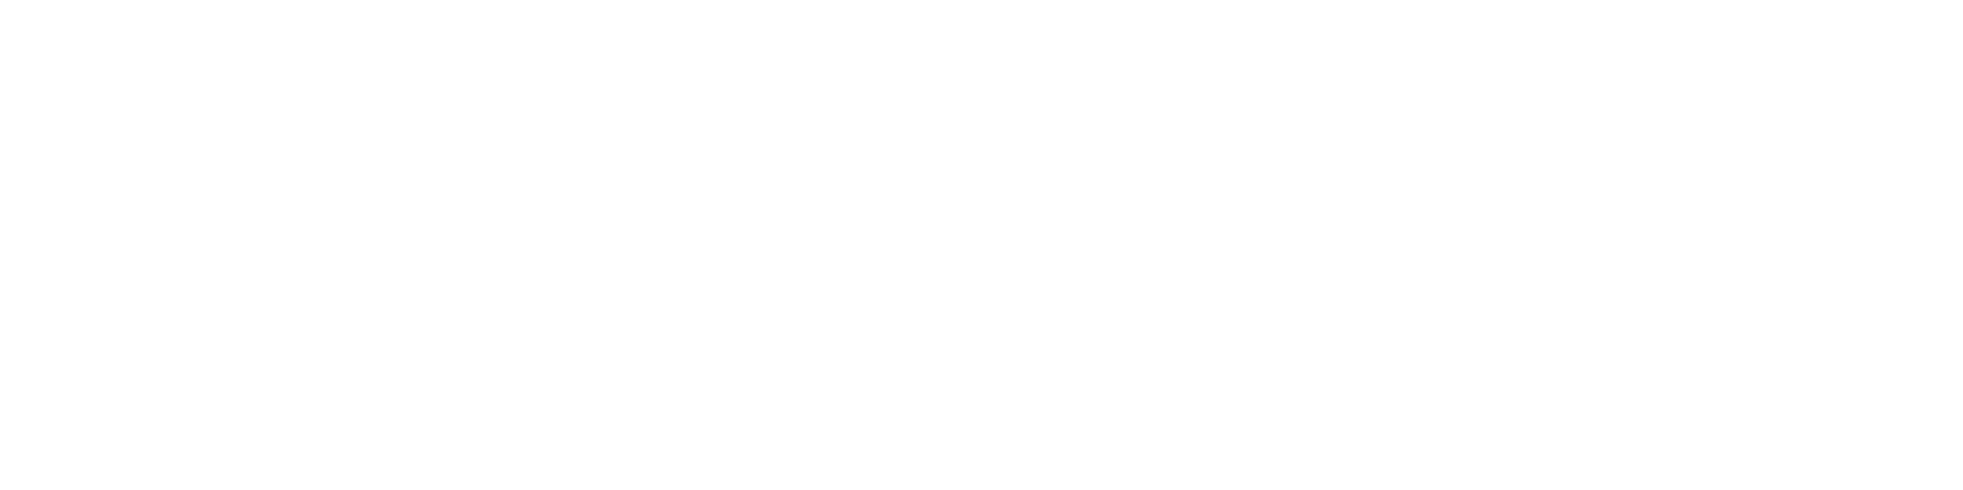 design digitalisation branding experience | ddbx